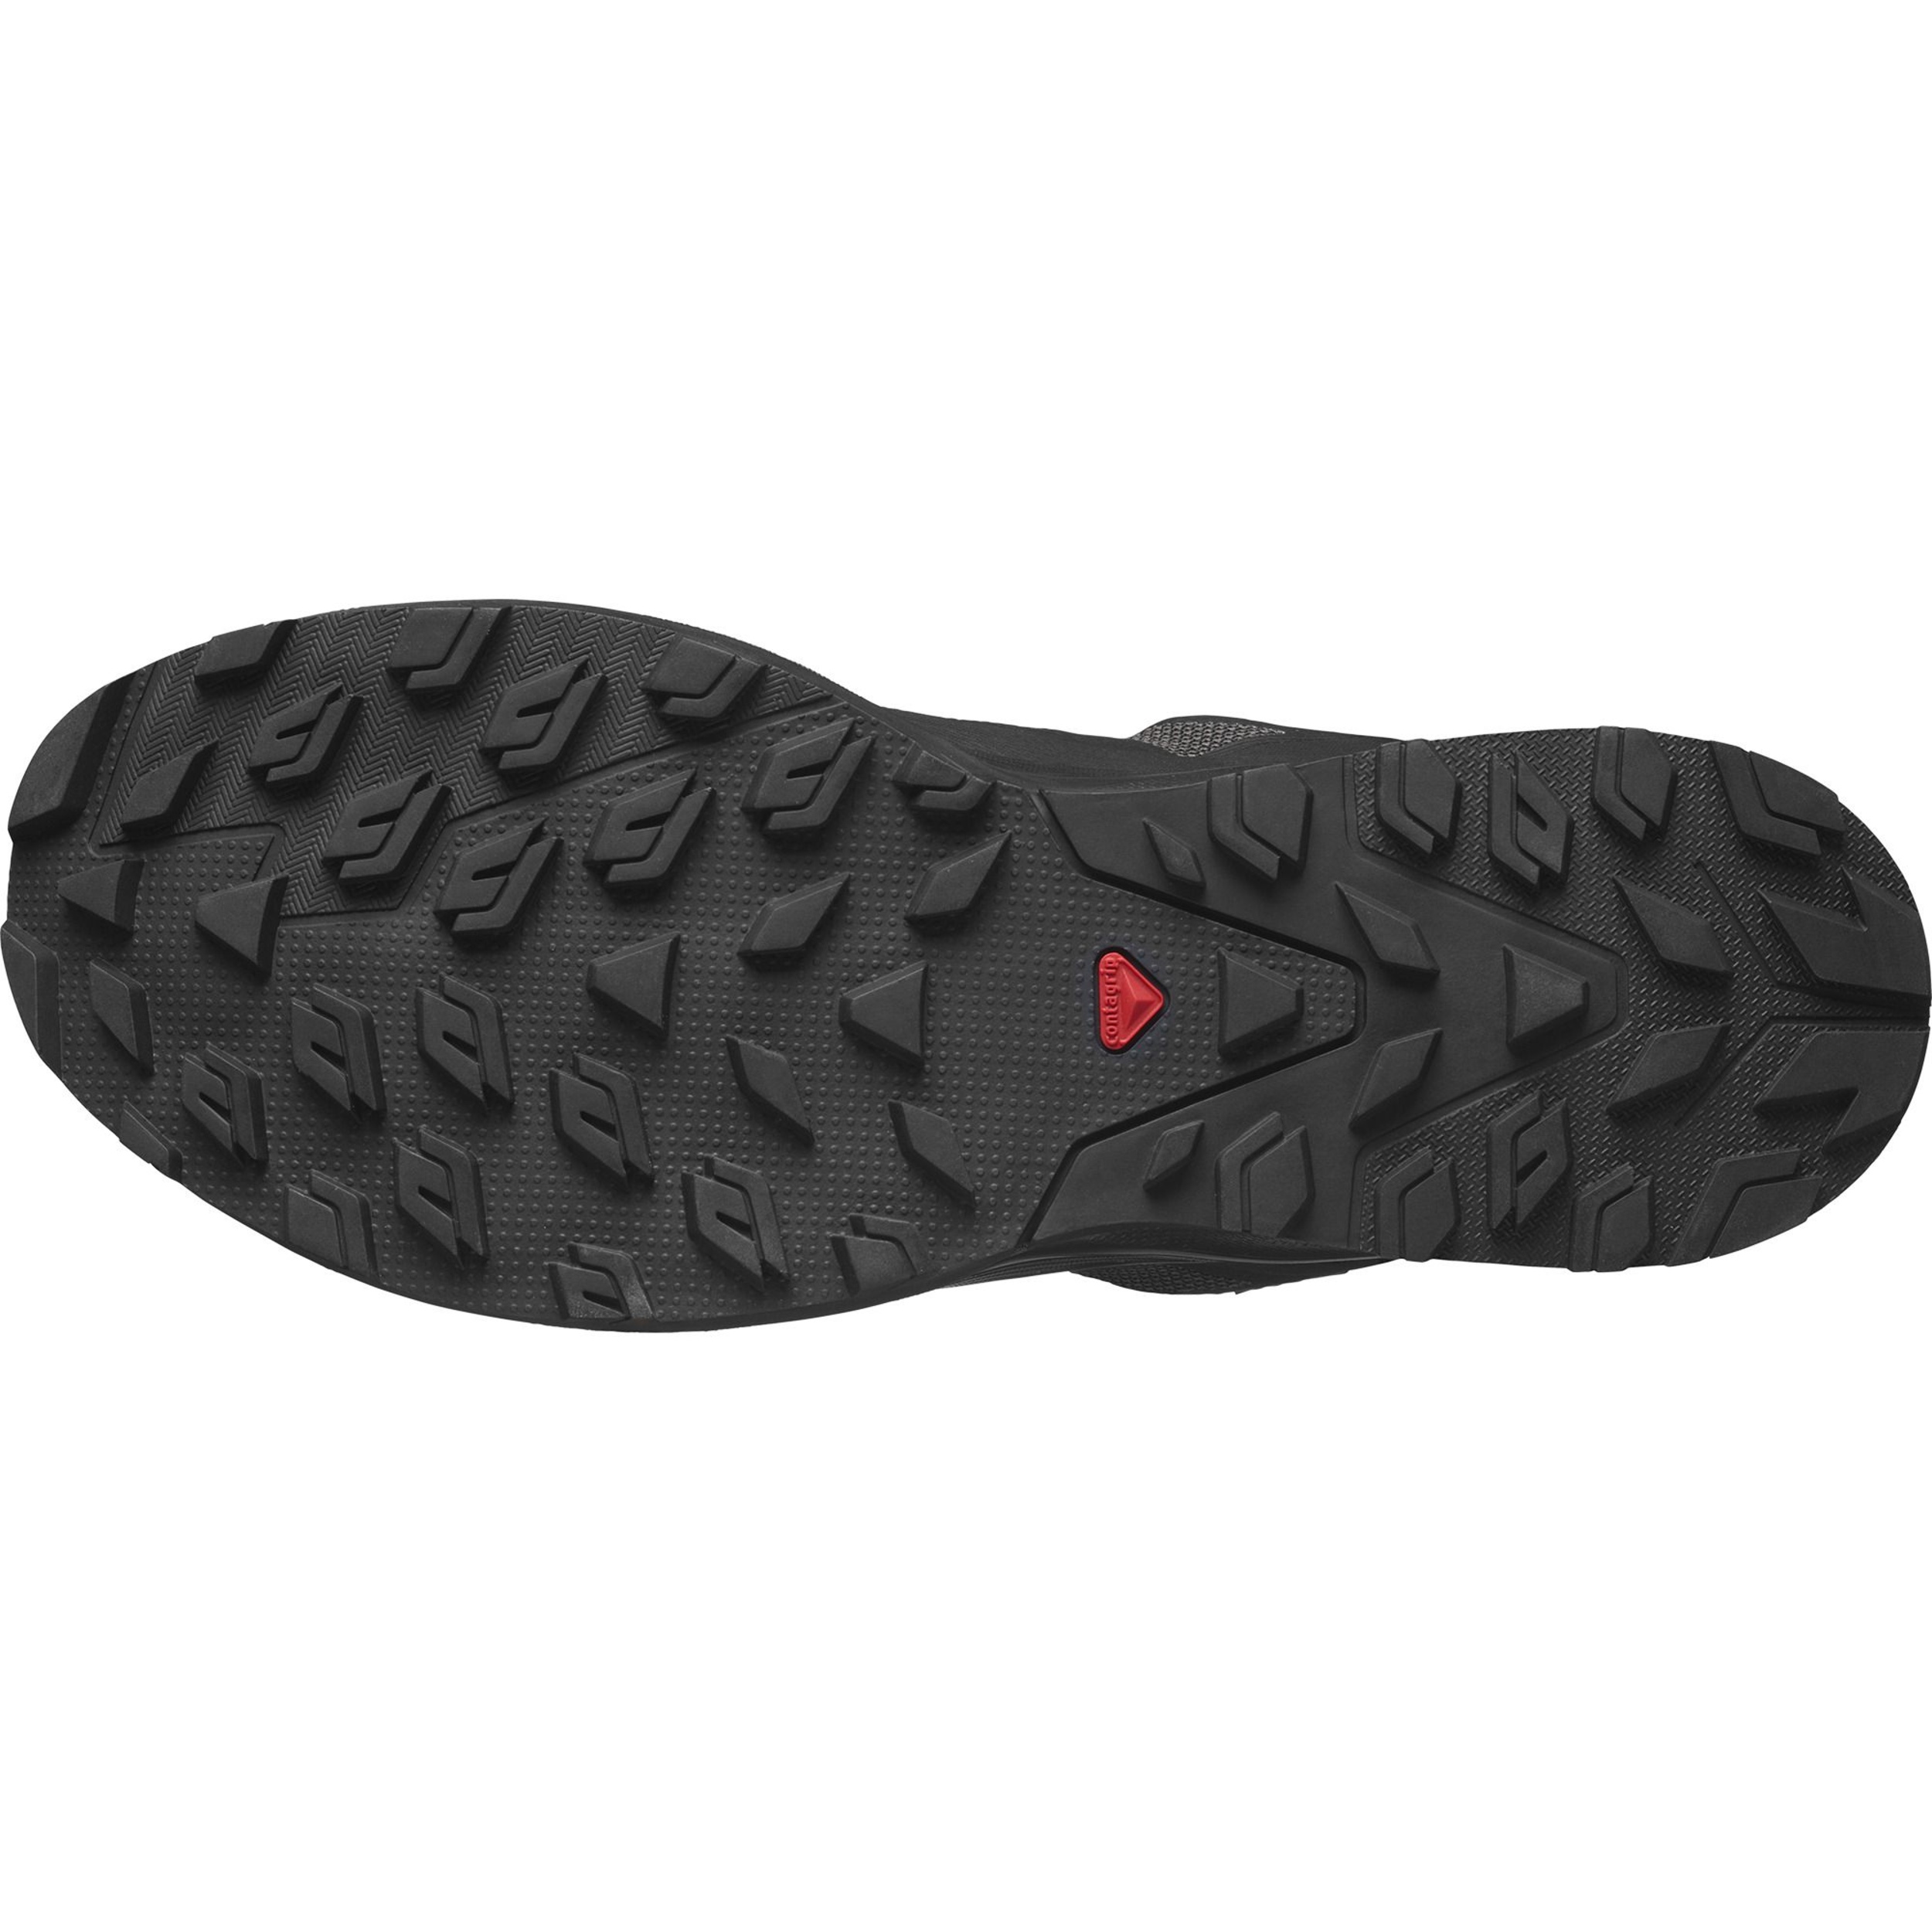 Salomon Men's Outrise Gore-Tex Hiking Shoes | SportChek